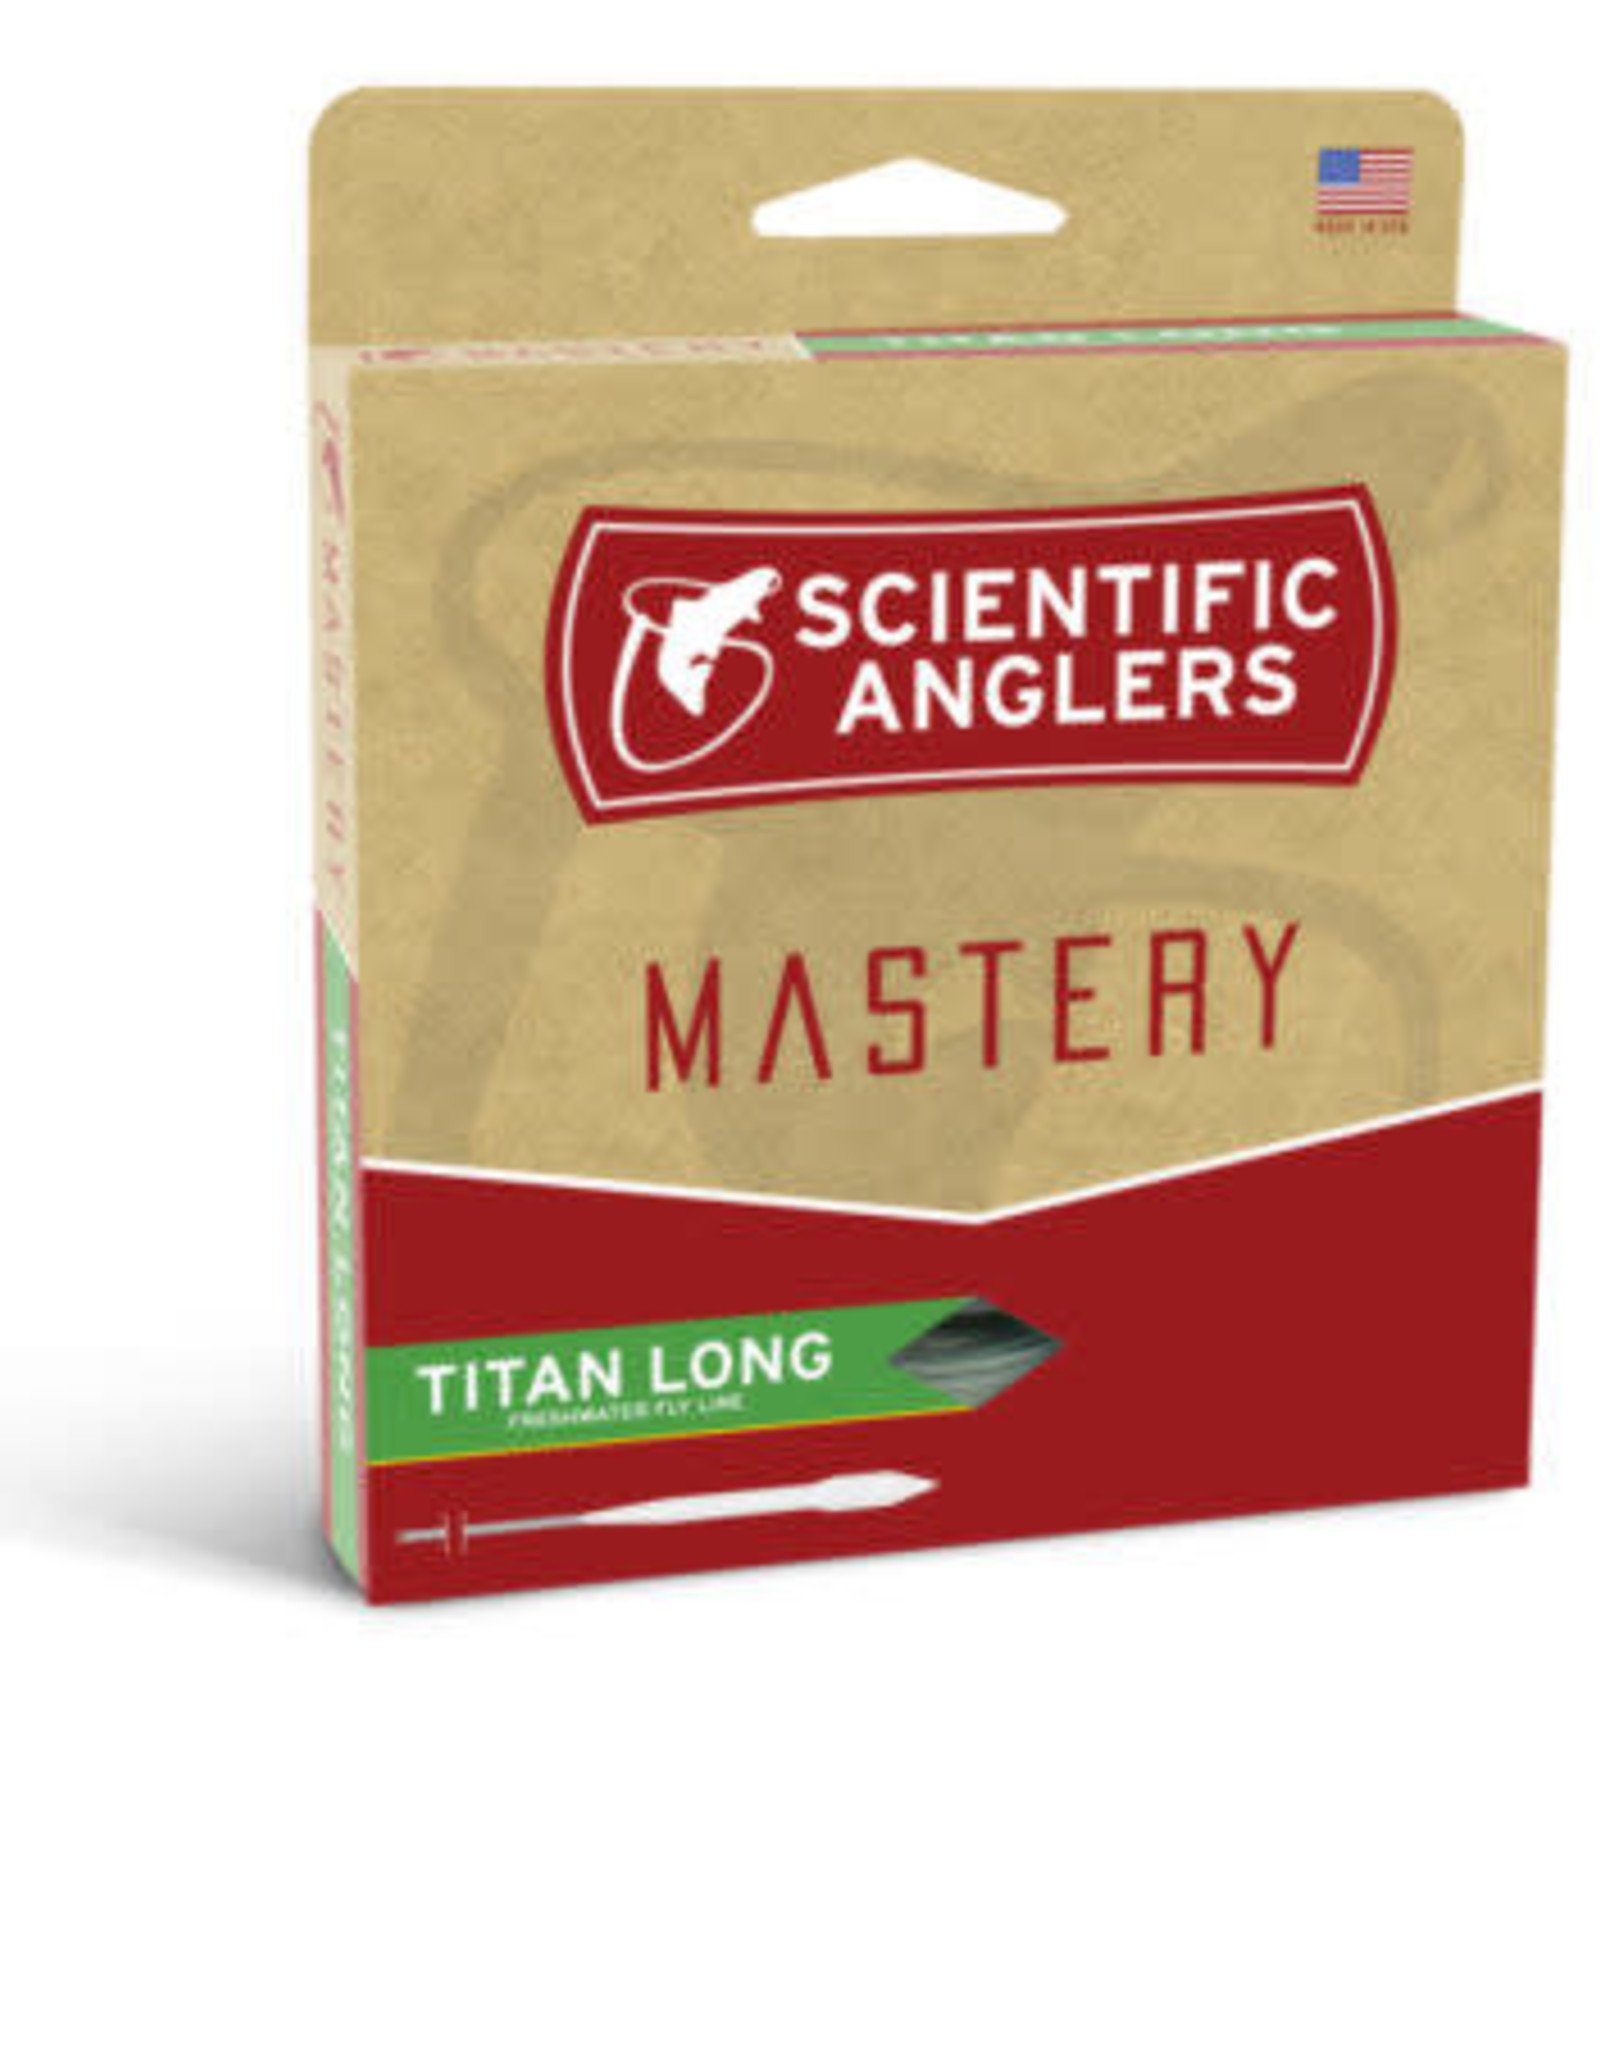 Scientific Anglers Scientific Anglers Mastery Titan Long